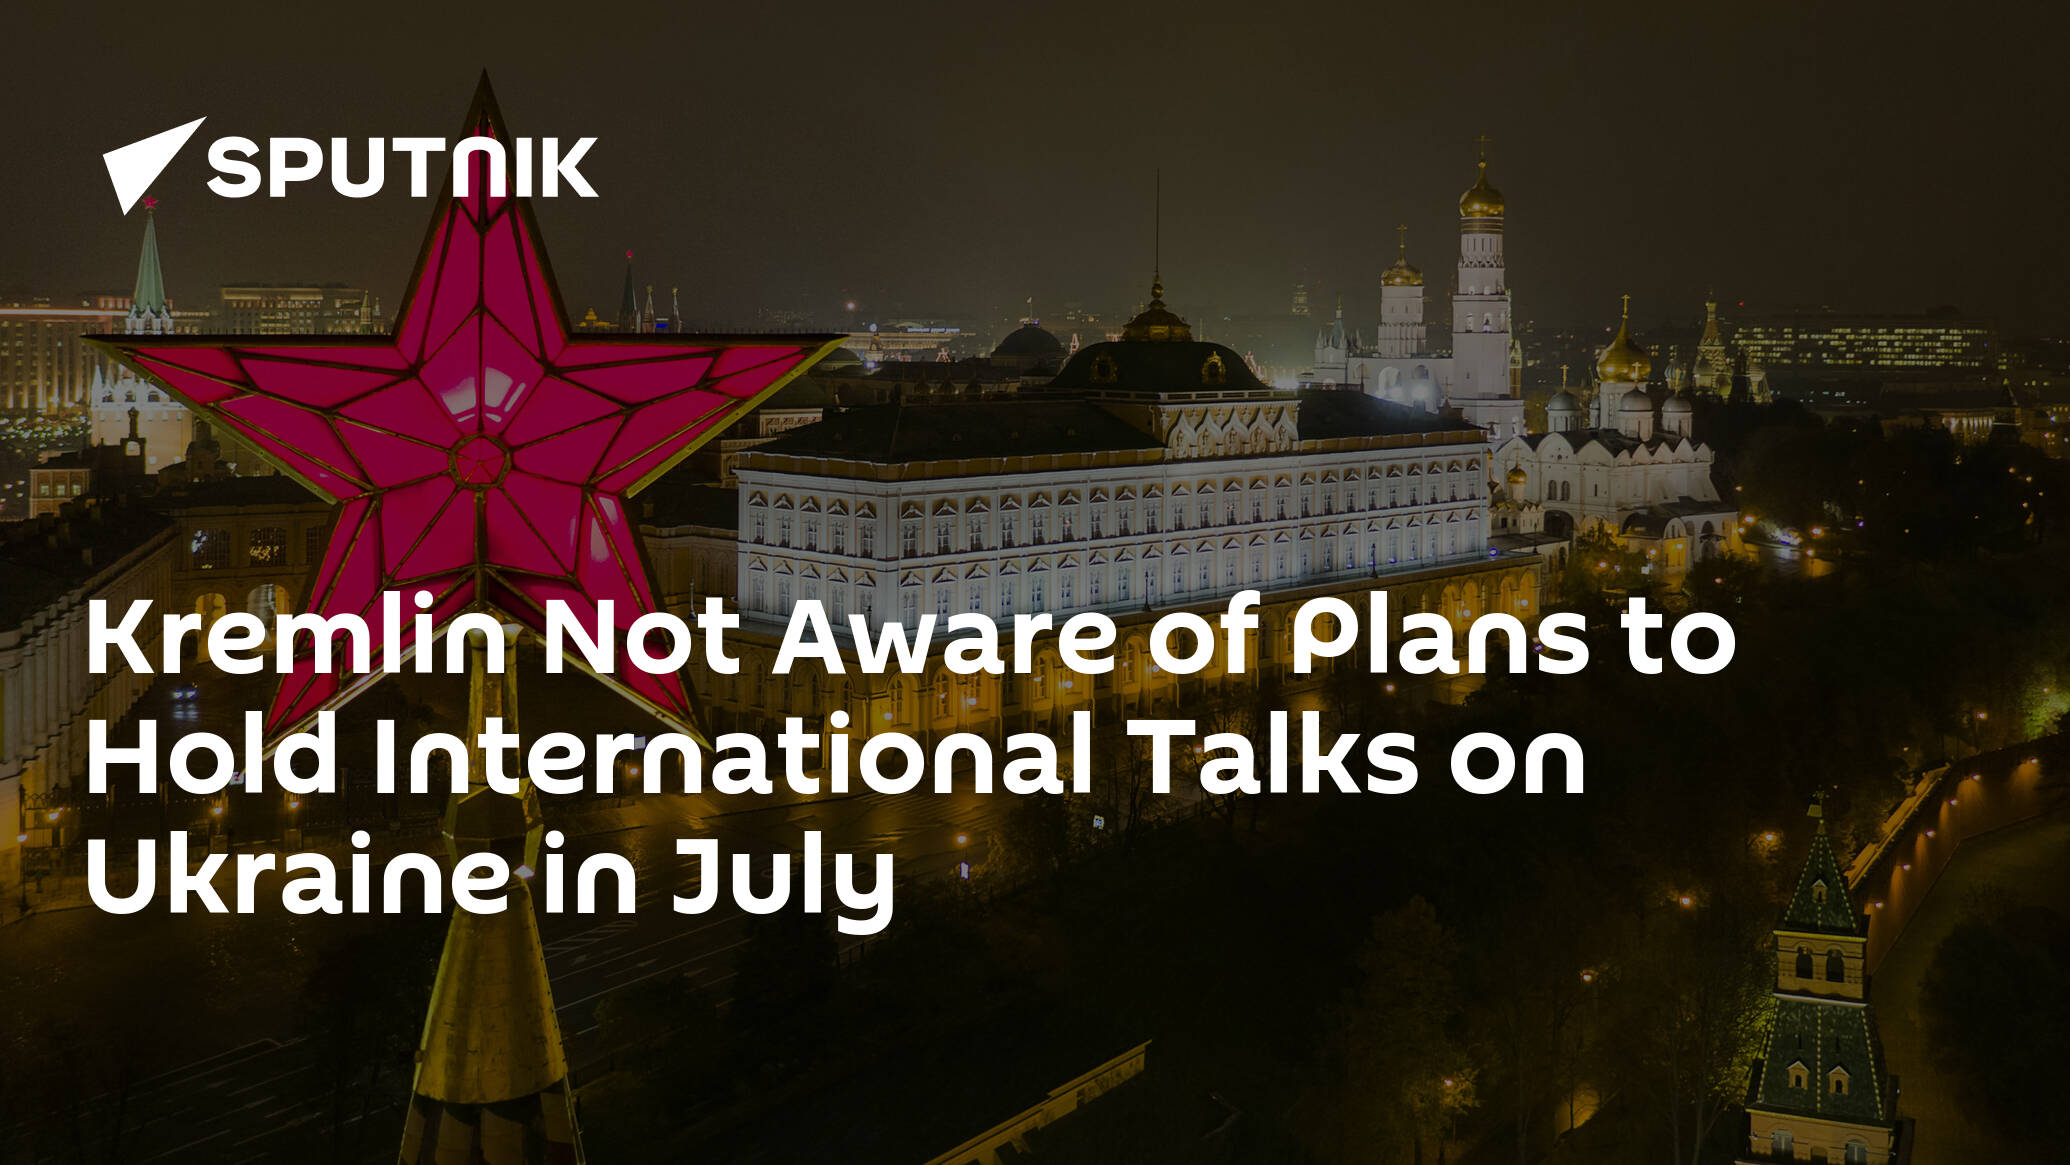 Kremlin Not Aware of Plans to Hold International Talks on Ukraine in July